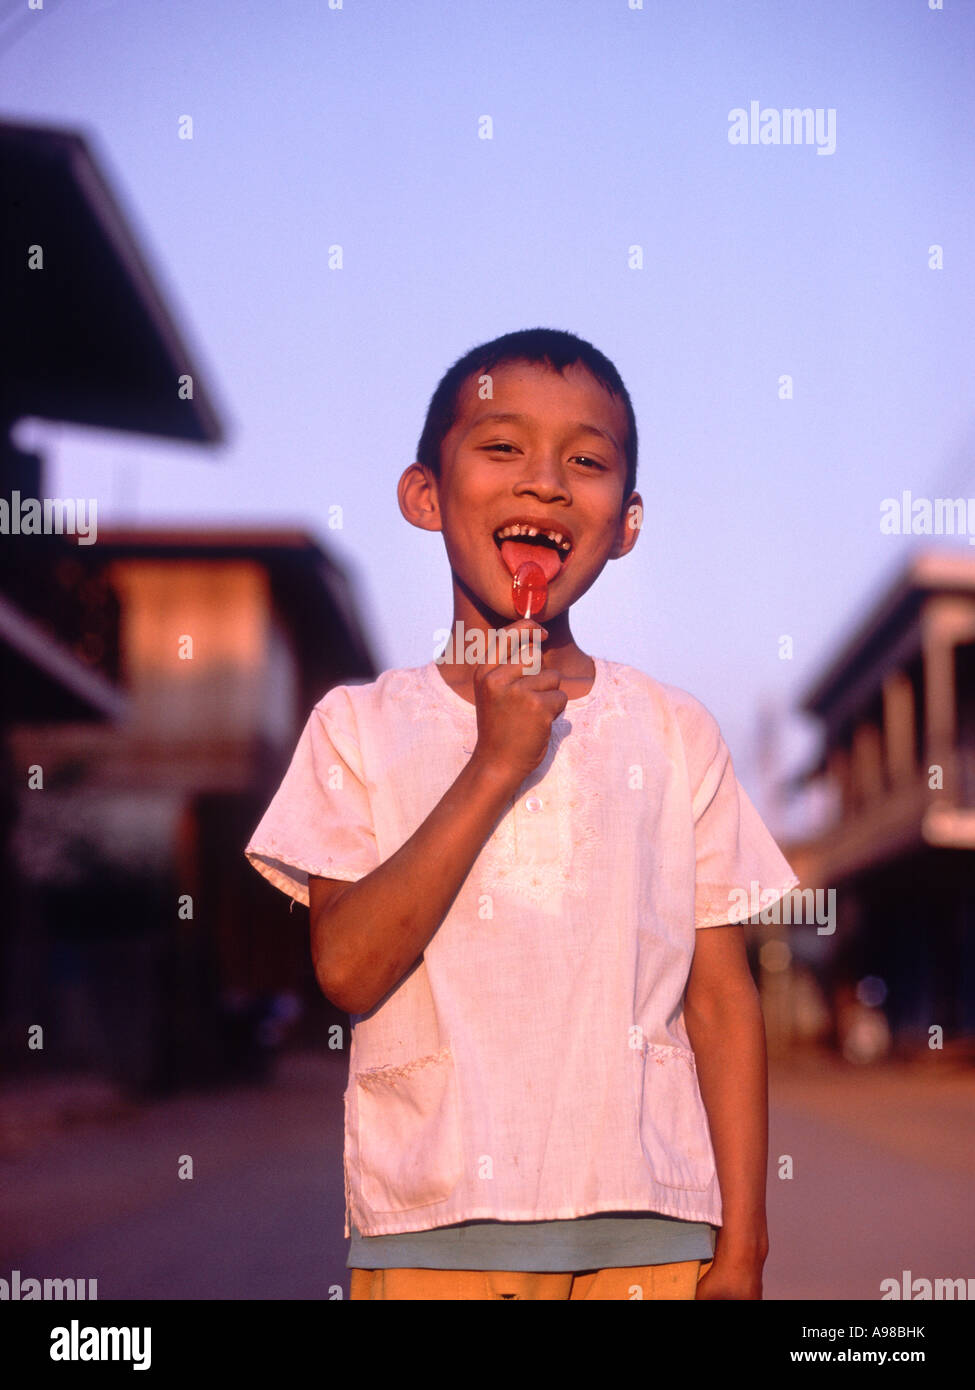 Smiling boy licking candy sucker in street, Chiang Khaen, NE Thailand, Asia Stock Photo